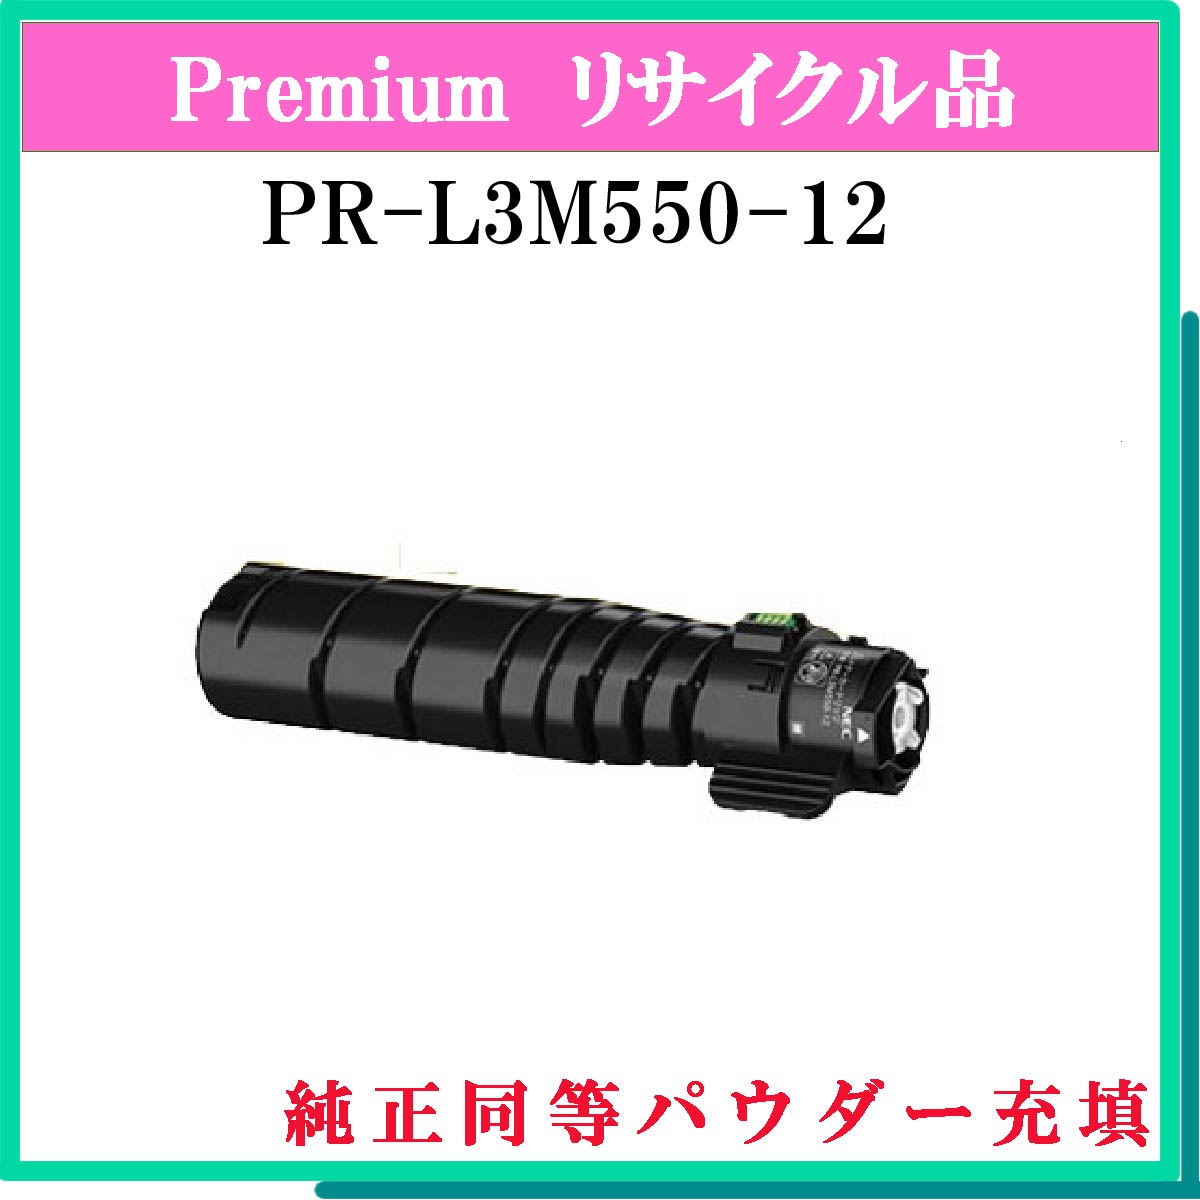 PR-L3M550-12 (純正同等ﾊﾟｳﾀﾞｰ) - ウインドウを閉じる